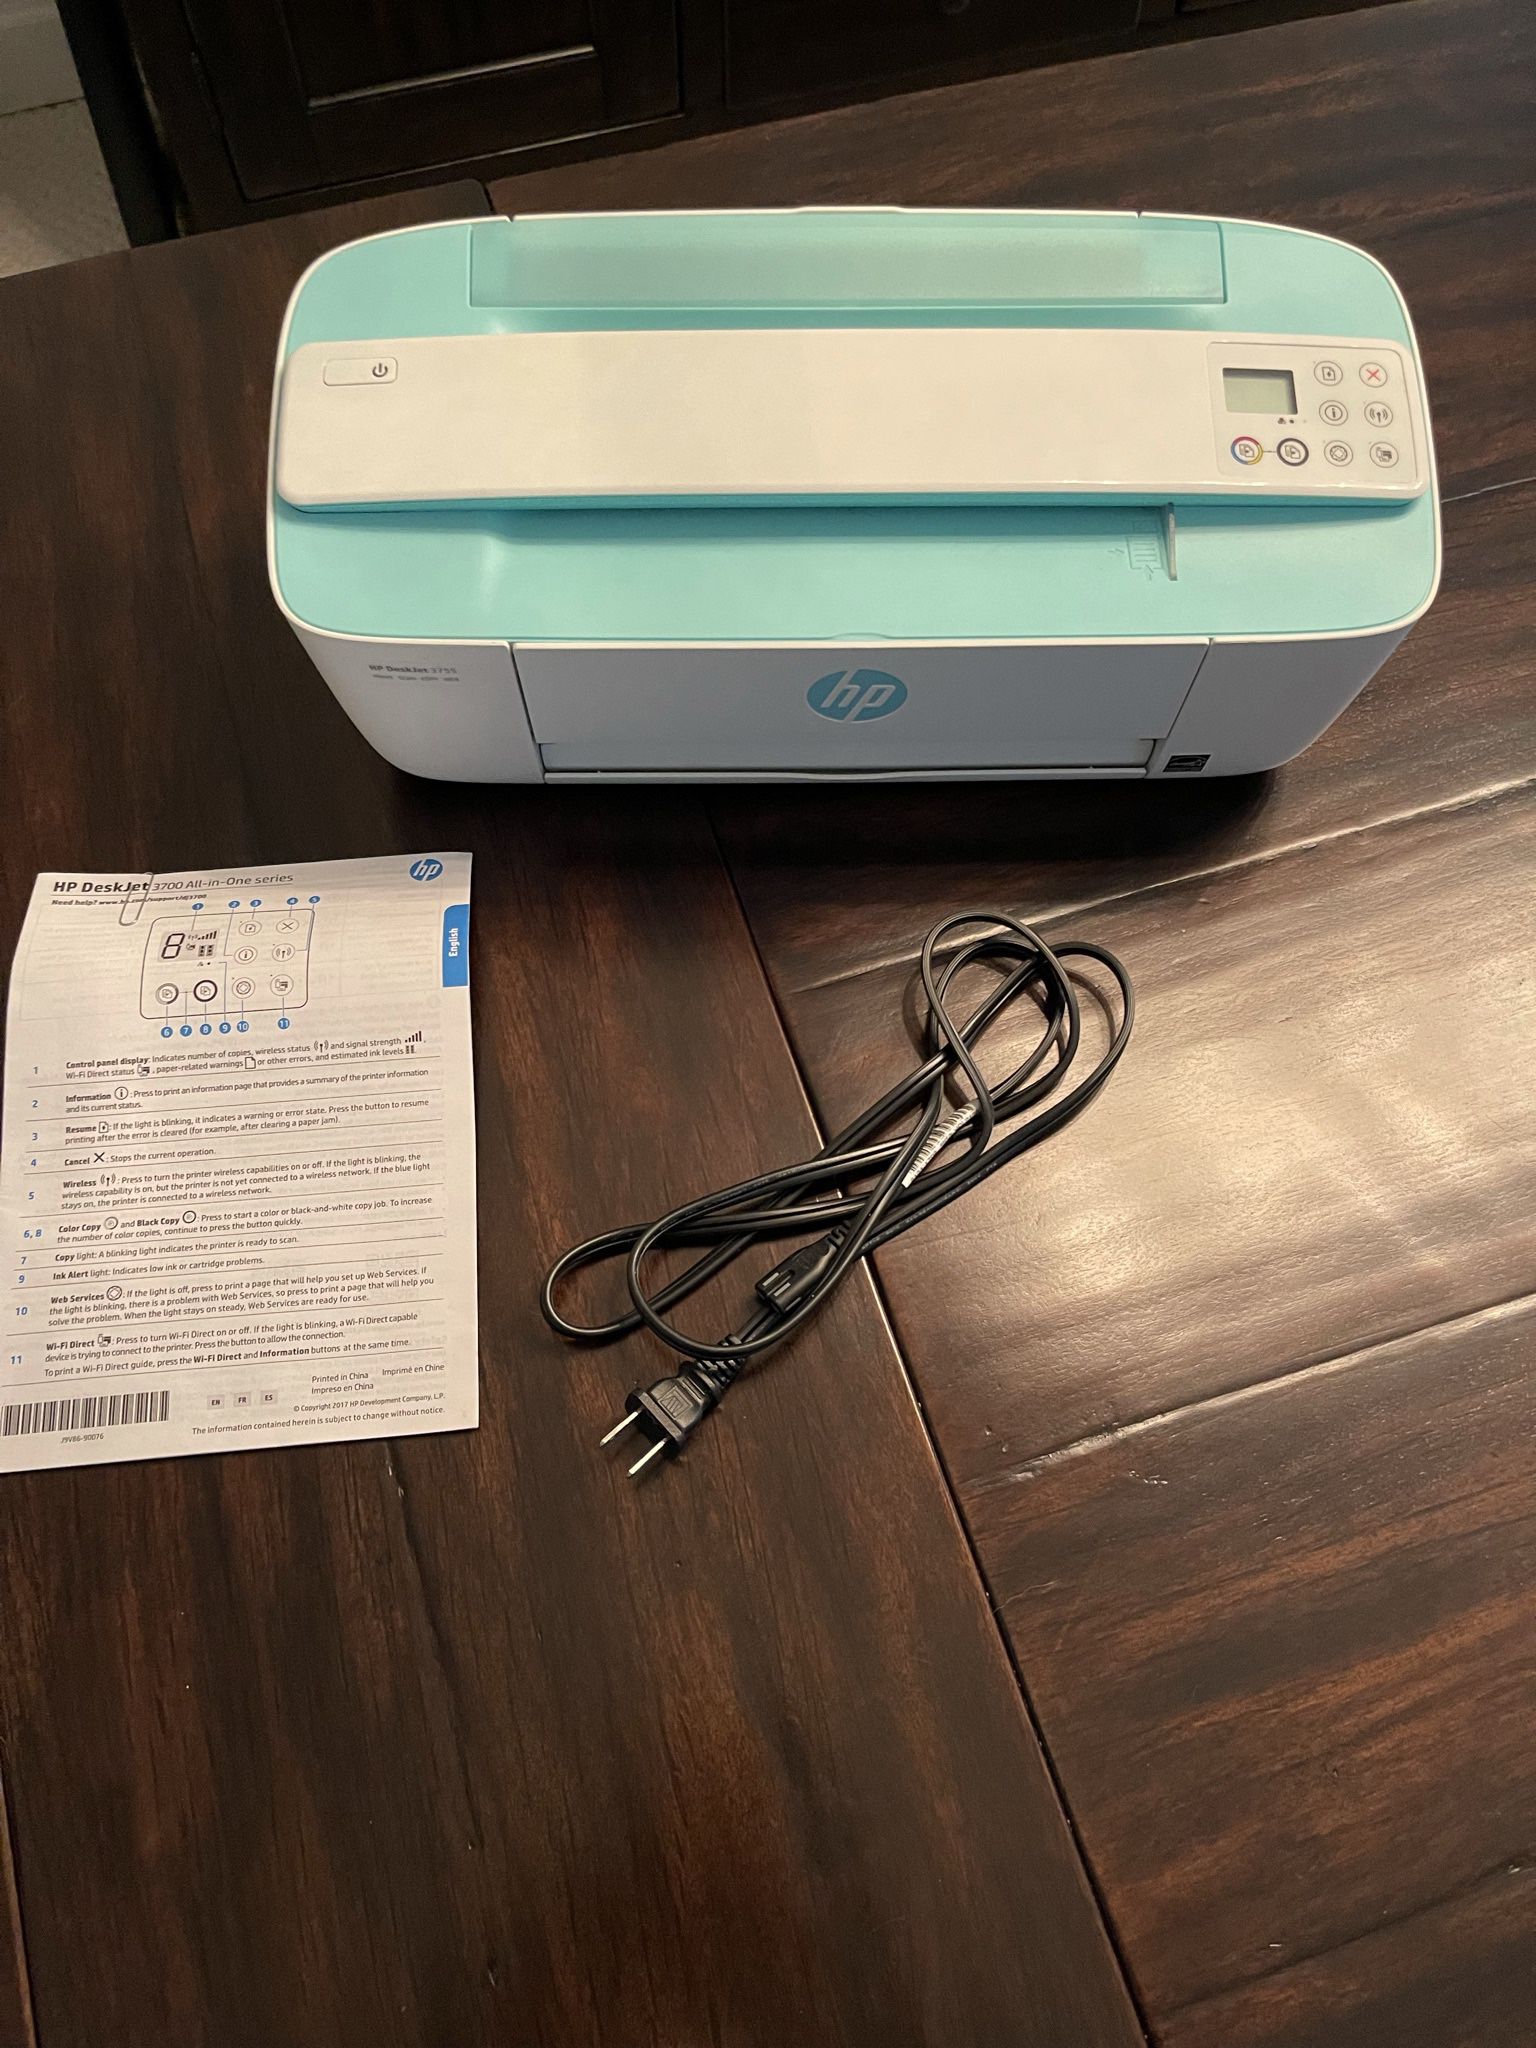 HP Desk Jet Printer - NEW 3700 All In One